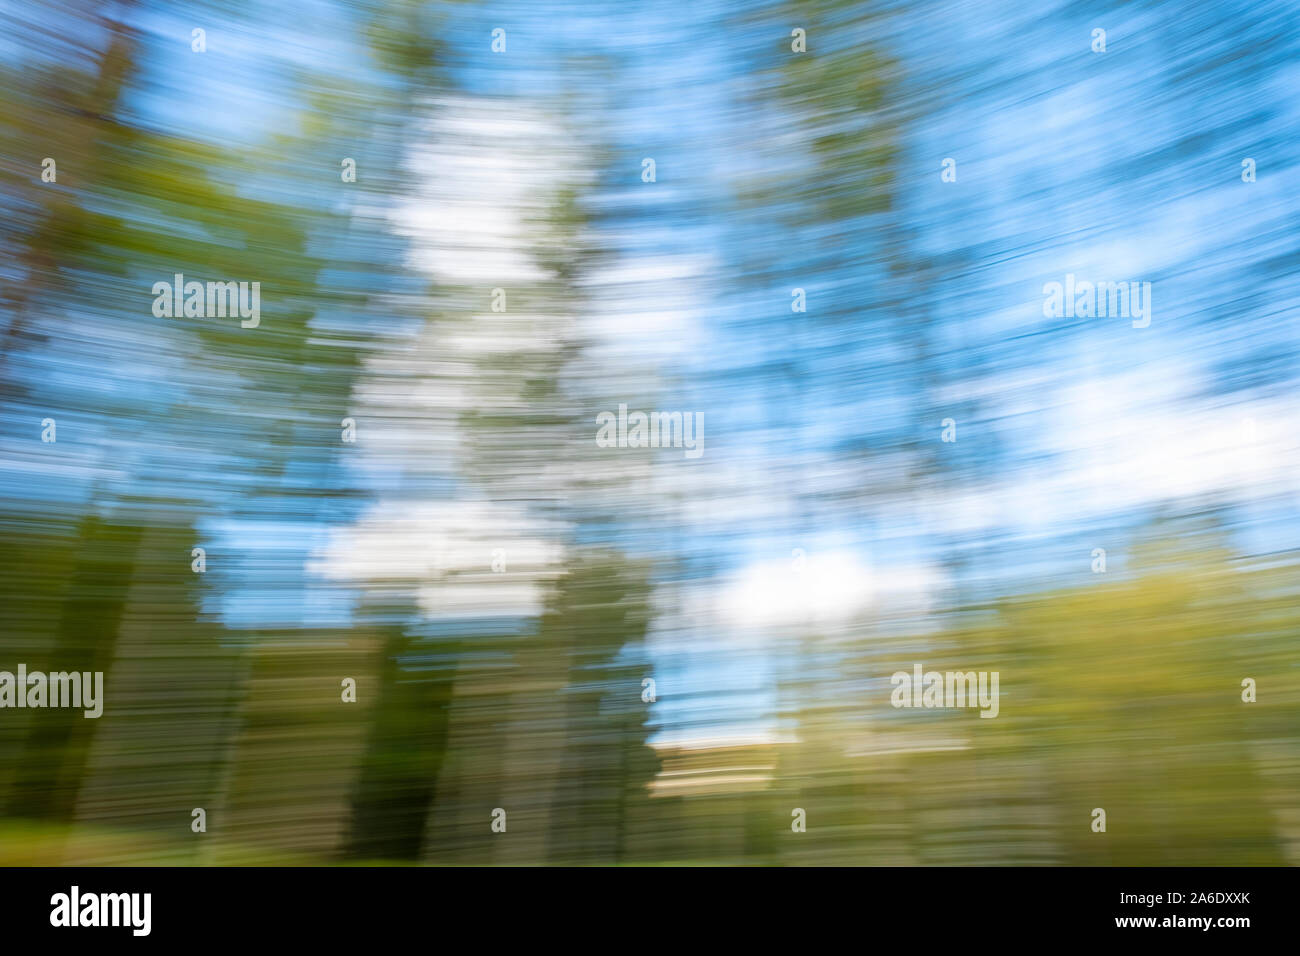 blurred nature background Stock Photo